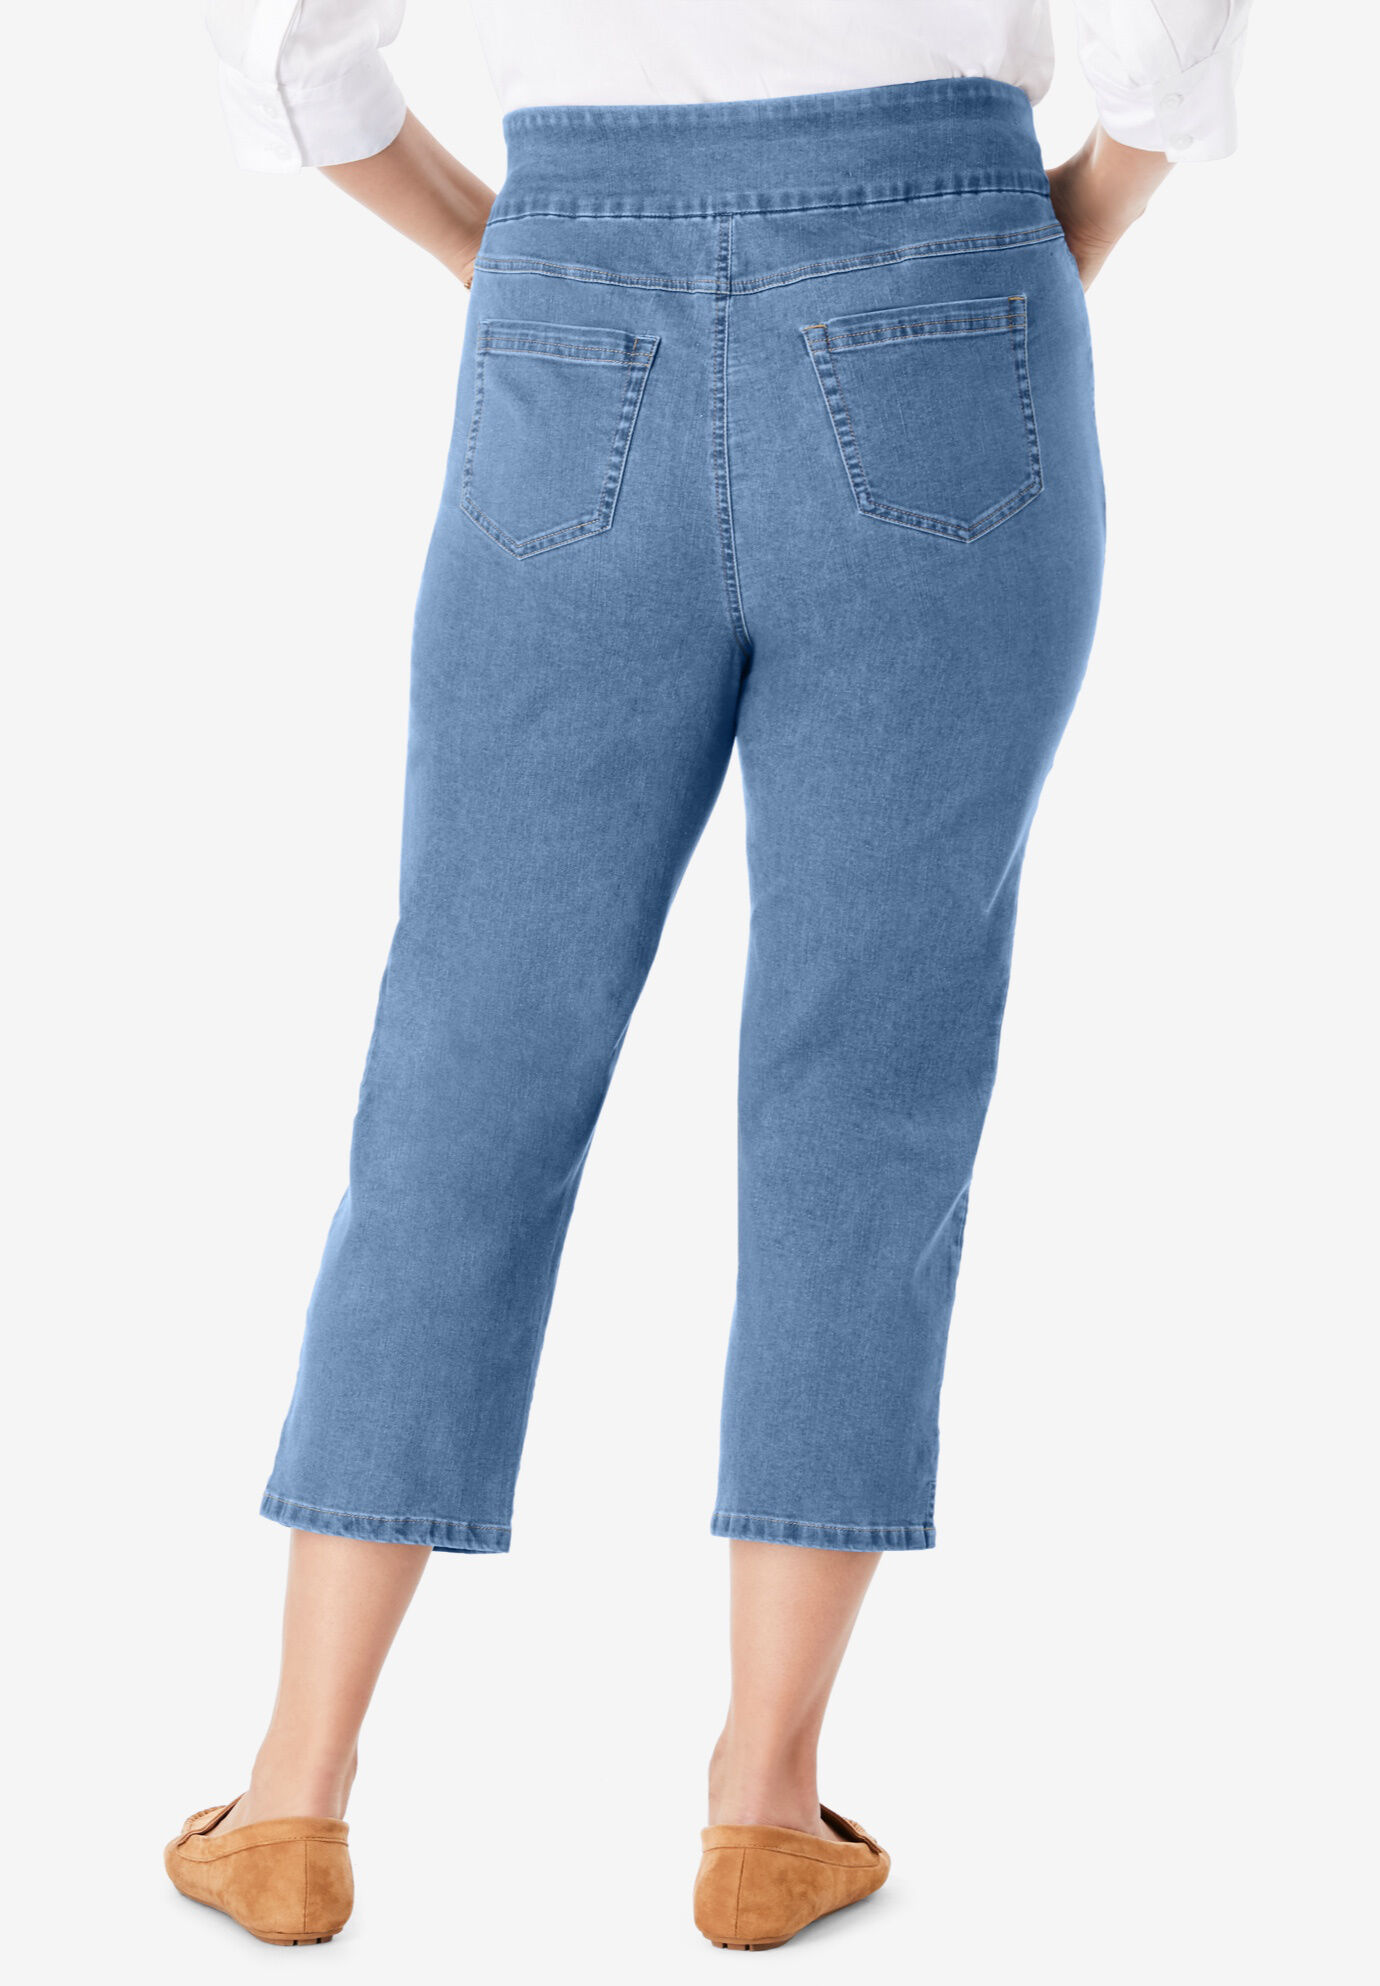 ZENTHACE Women's Mid Rise Stretchy Capri Jeans 